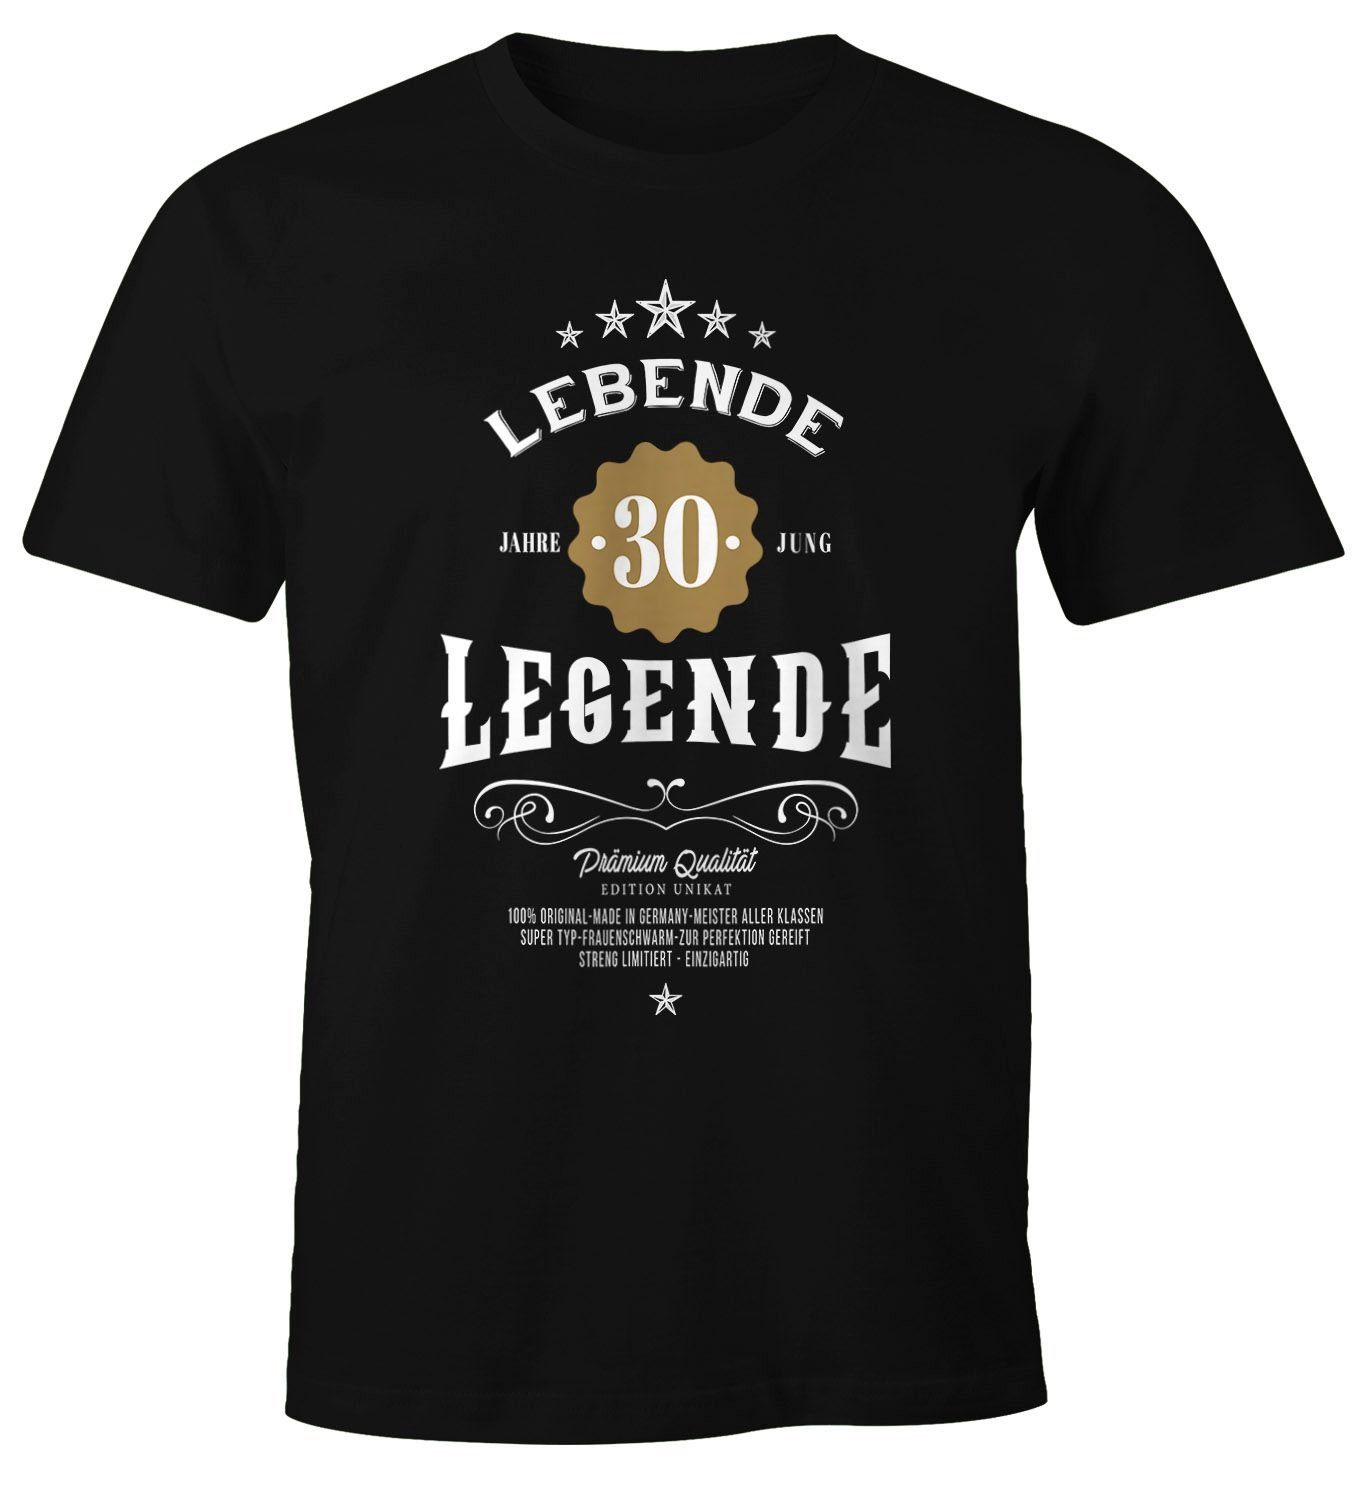 MoonWorks Print-Shirt Herren T-Shirt mit Lebende 30-80 30 Moonworks® Legende jung Jahre Geburtstag Print schwarz Geschenk